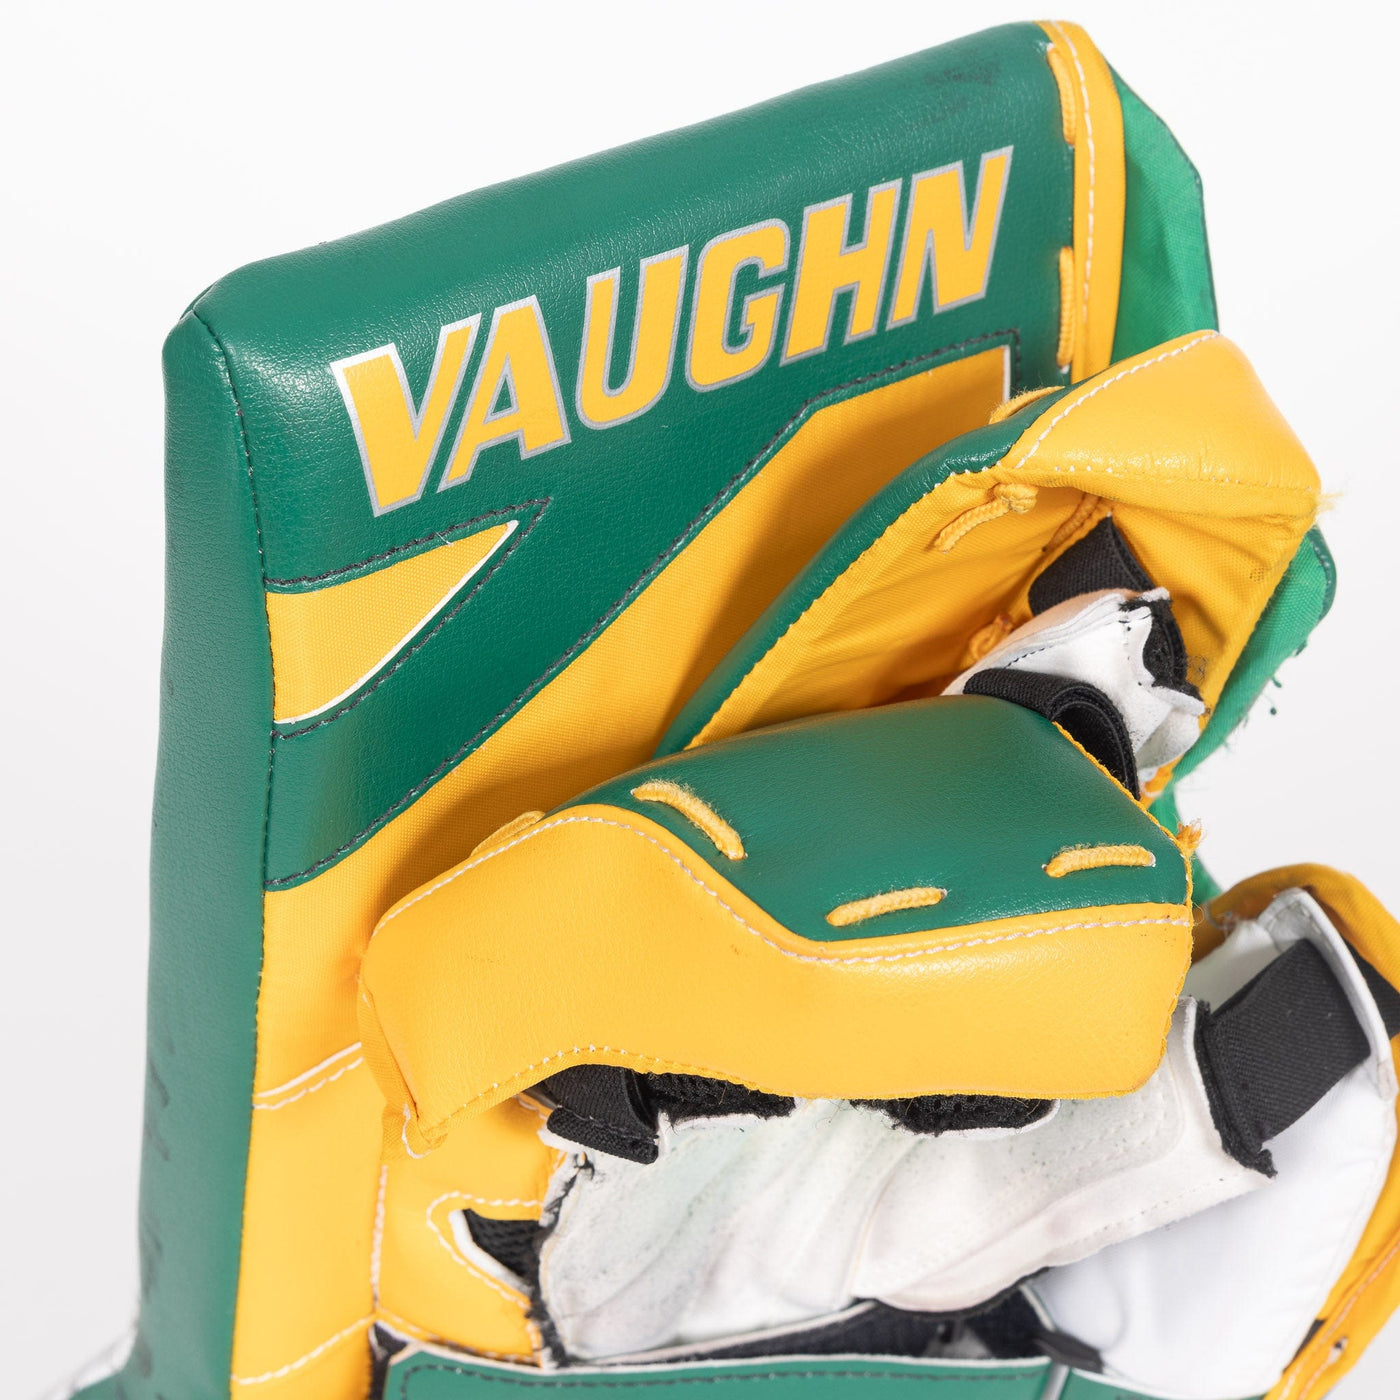 Vaughn Ventus SLR3 Pro Carbon Senior Goalie Blocker - Pro Stock - TheHockeyShop.com